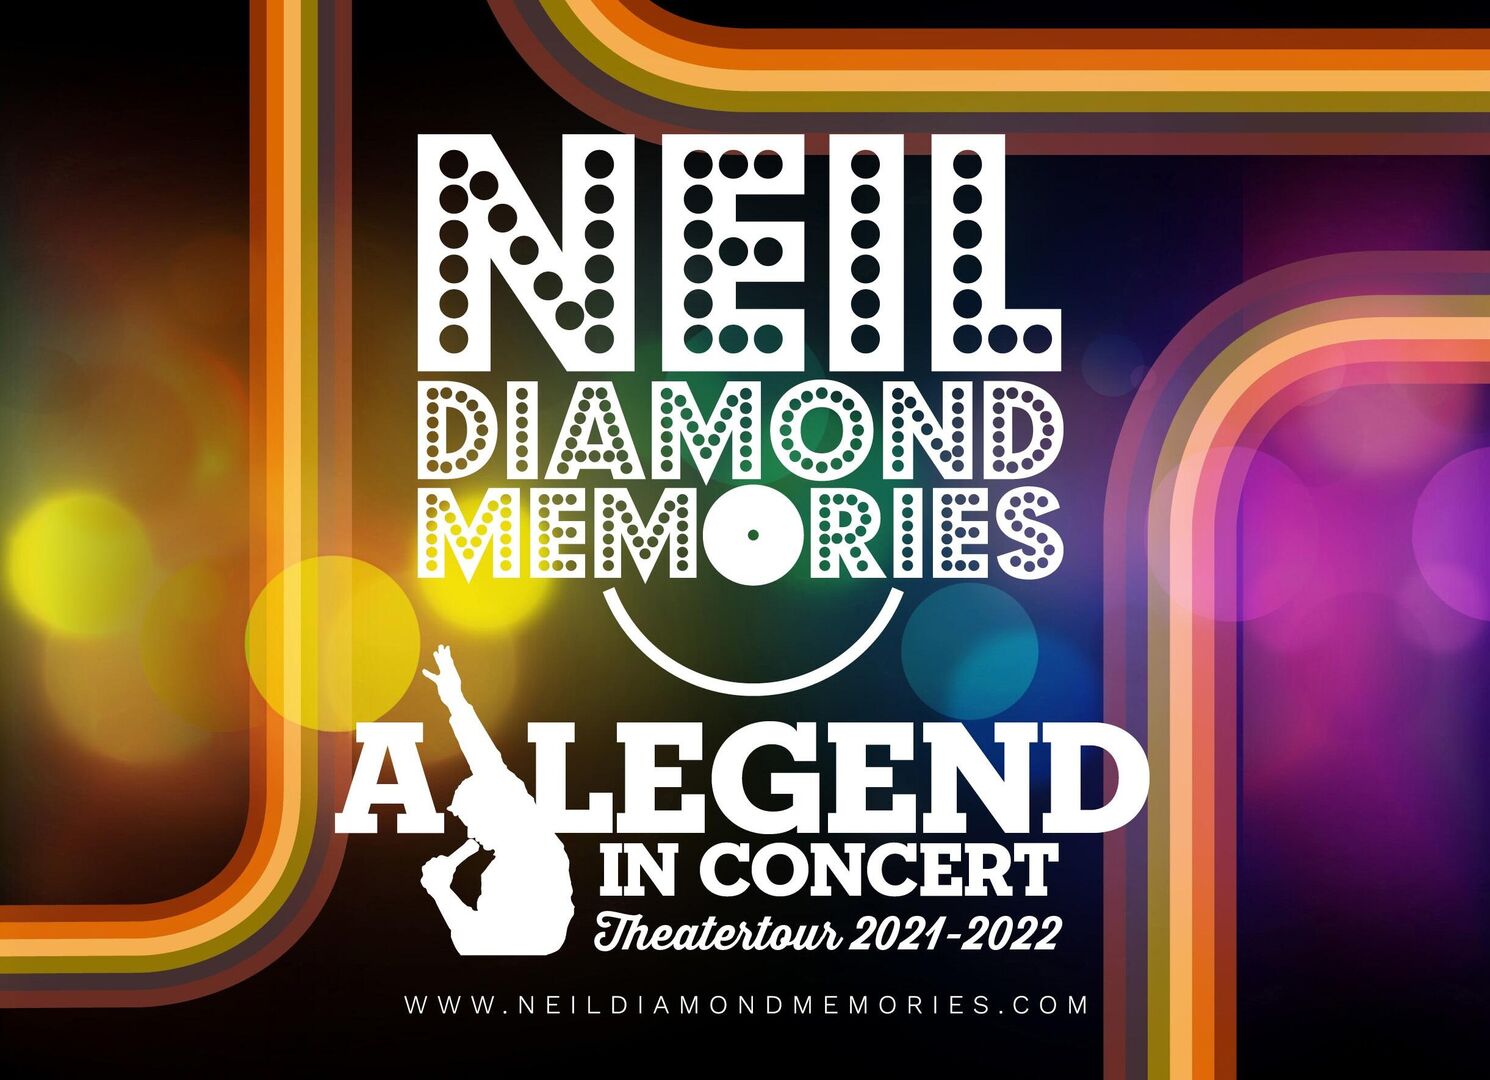 De Neil Diamond Memories band